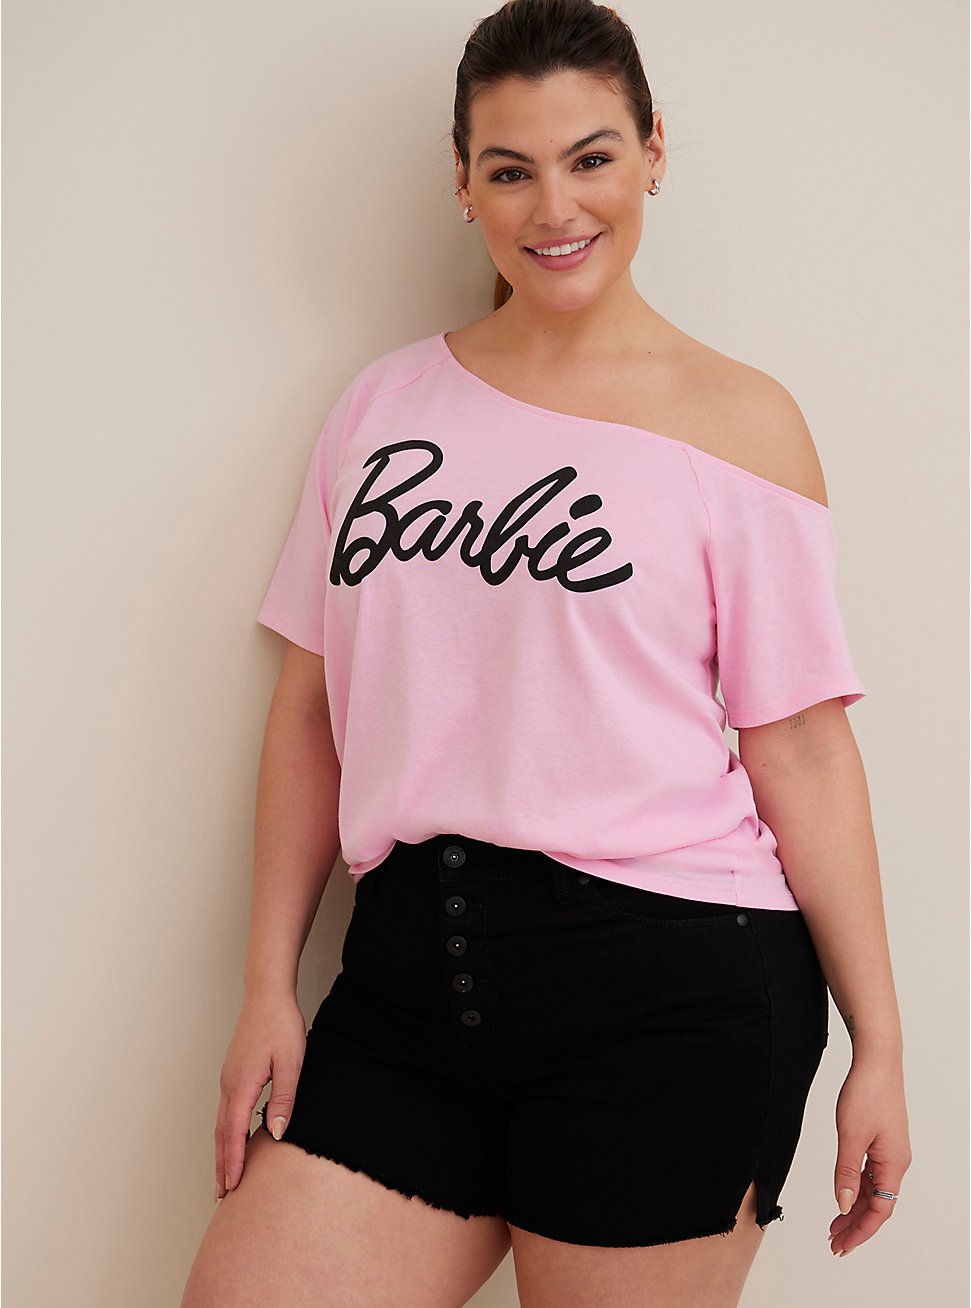 Barbie Classic Fit One Shoulder Top - Cotton Pink, PINK, hi-res